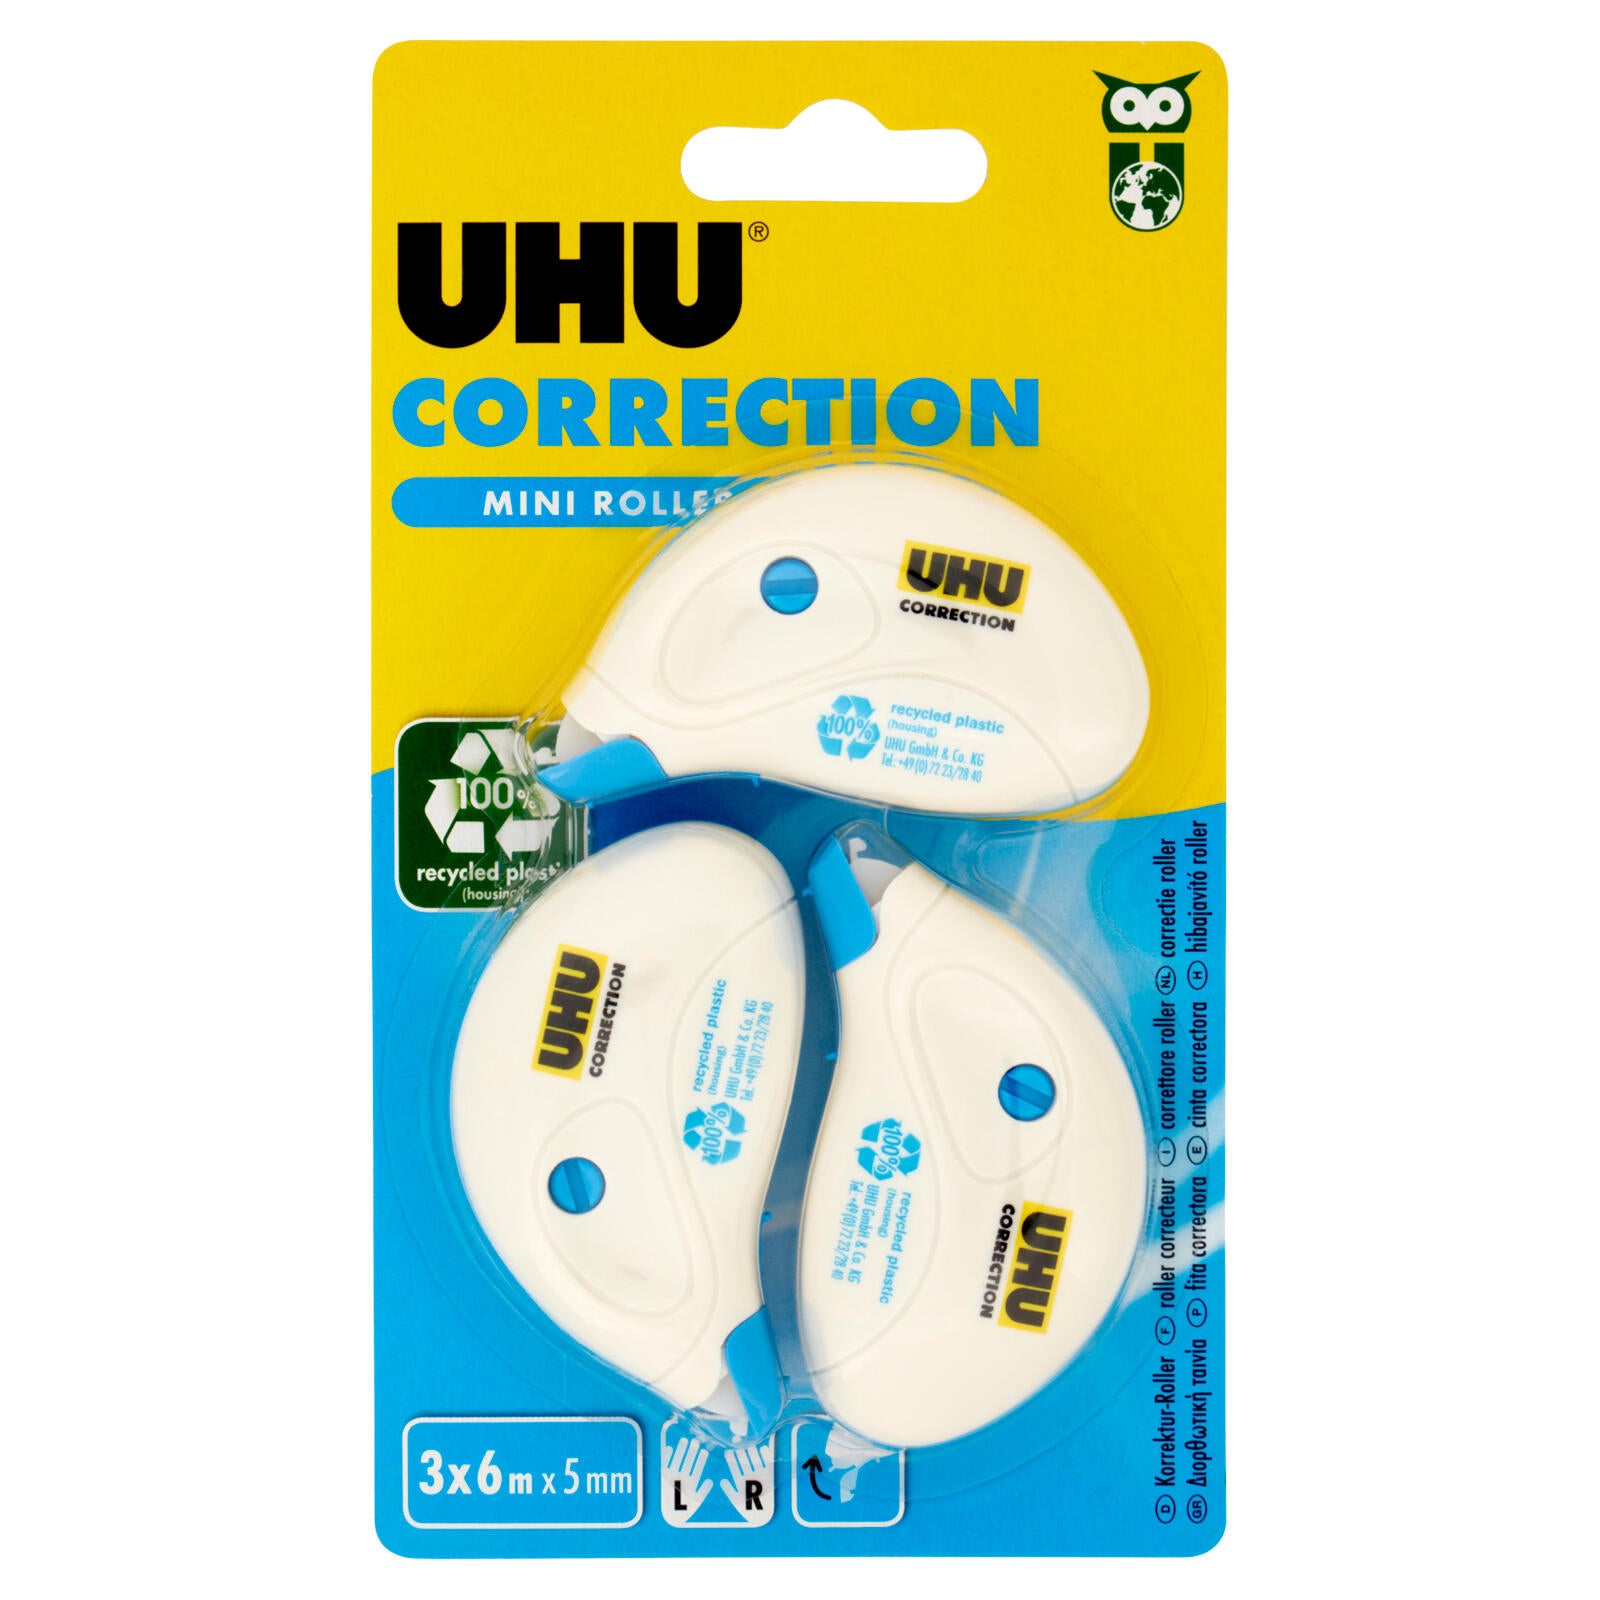 UHU Correction Mini Roller 6m x 5mm 3 pz